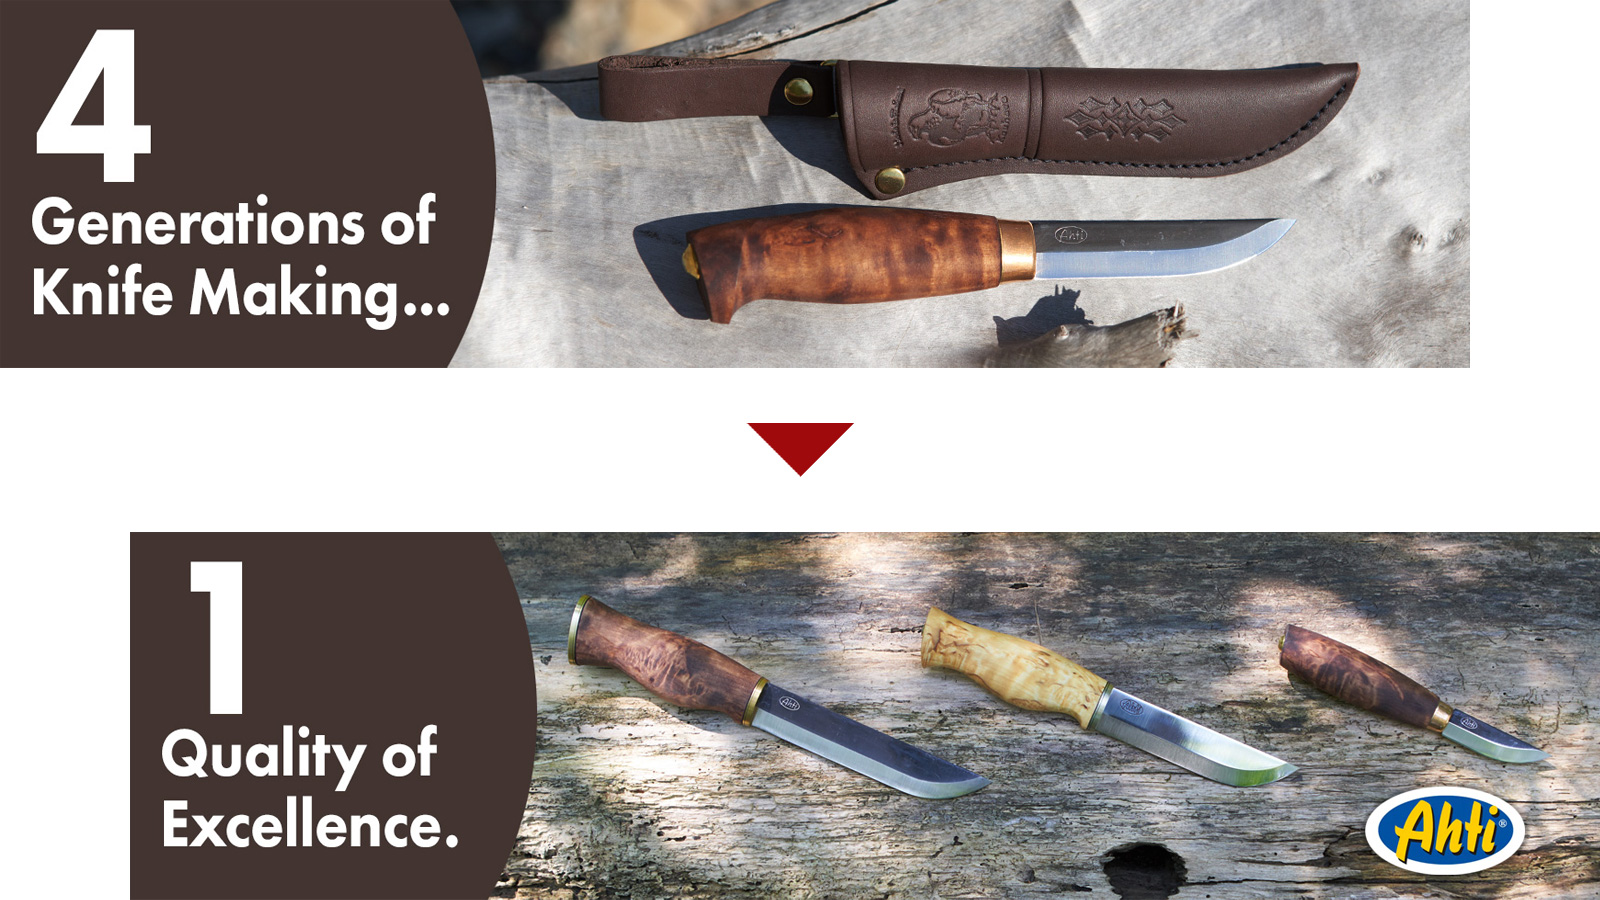 Website banners of Scandinavian knives photographed on various fallen logs